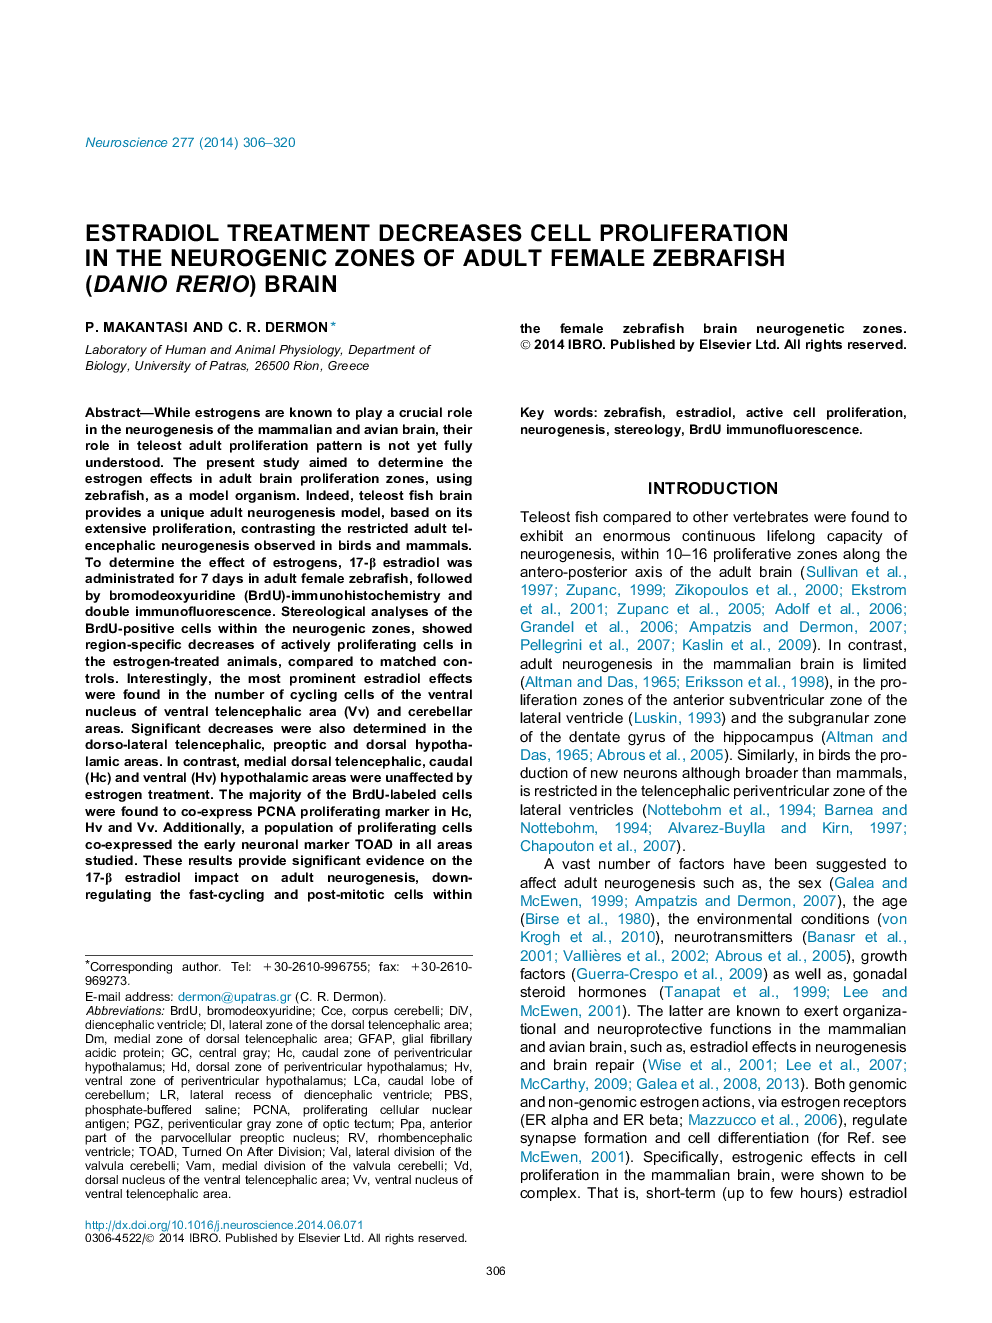 Estradiol treatment decreases cell proliferation in the neurogenic zones of adult female zebrafish (Danio rerio) brain